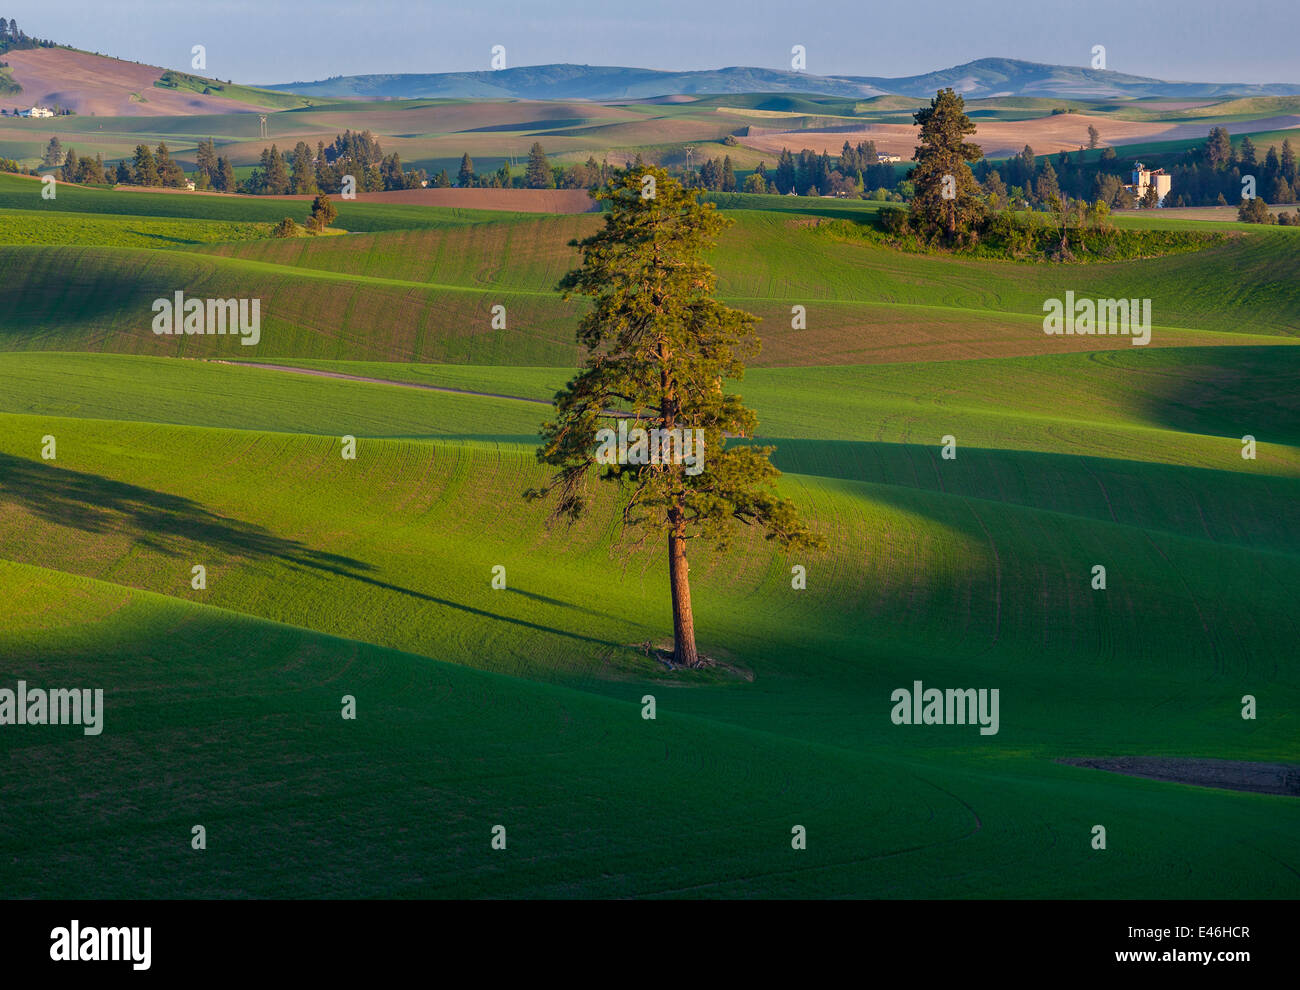 The Palouse, Whitman County, Washington: Single pine tree among rolling hills and patterns of emerging wheat Stock Photo